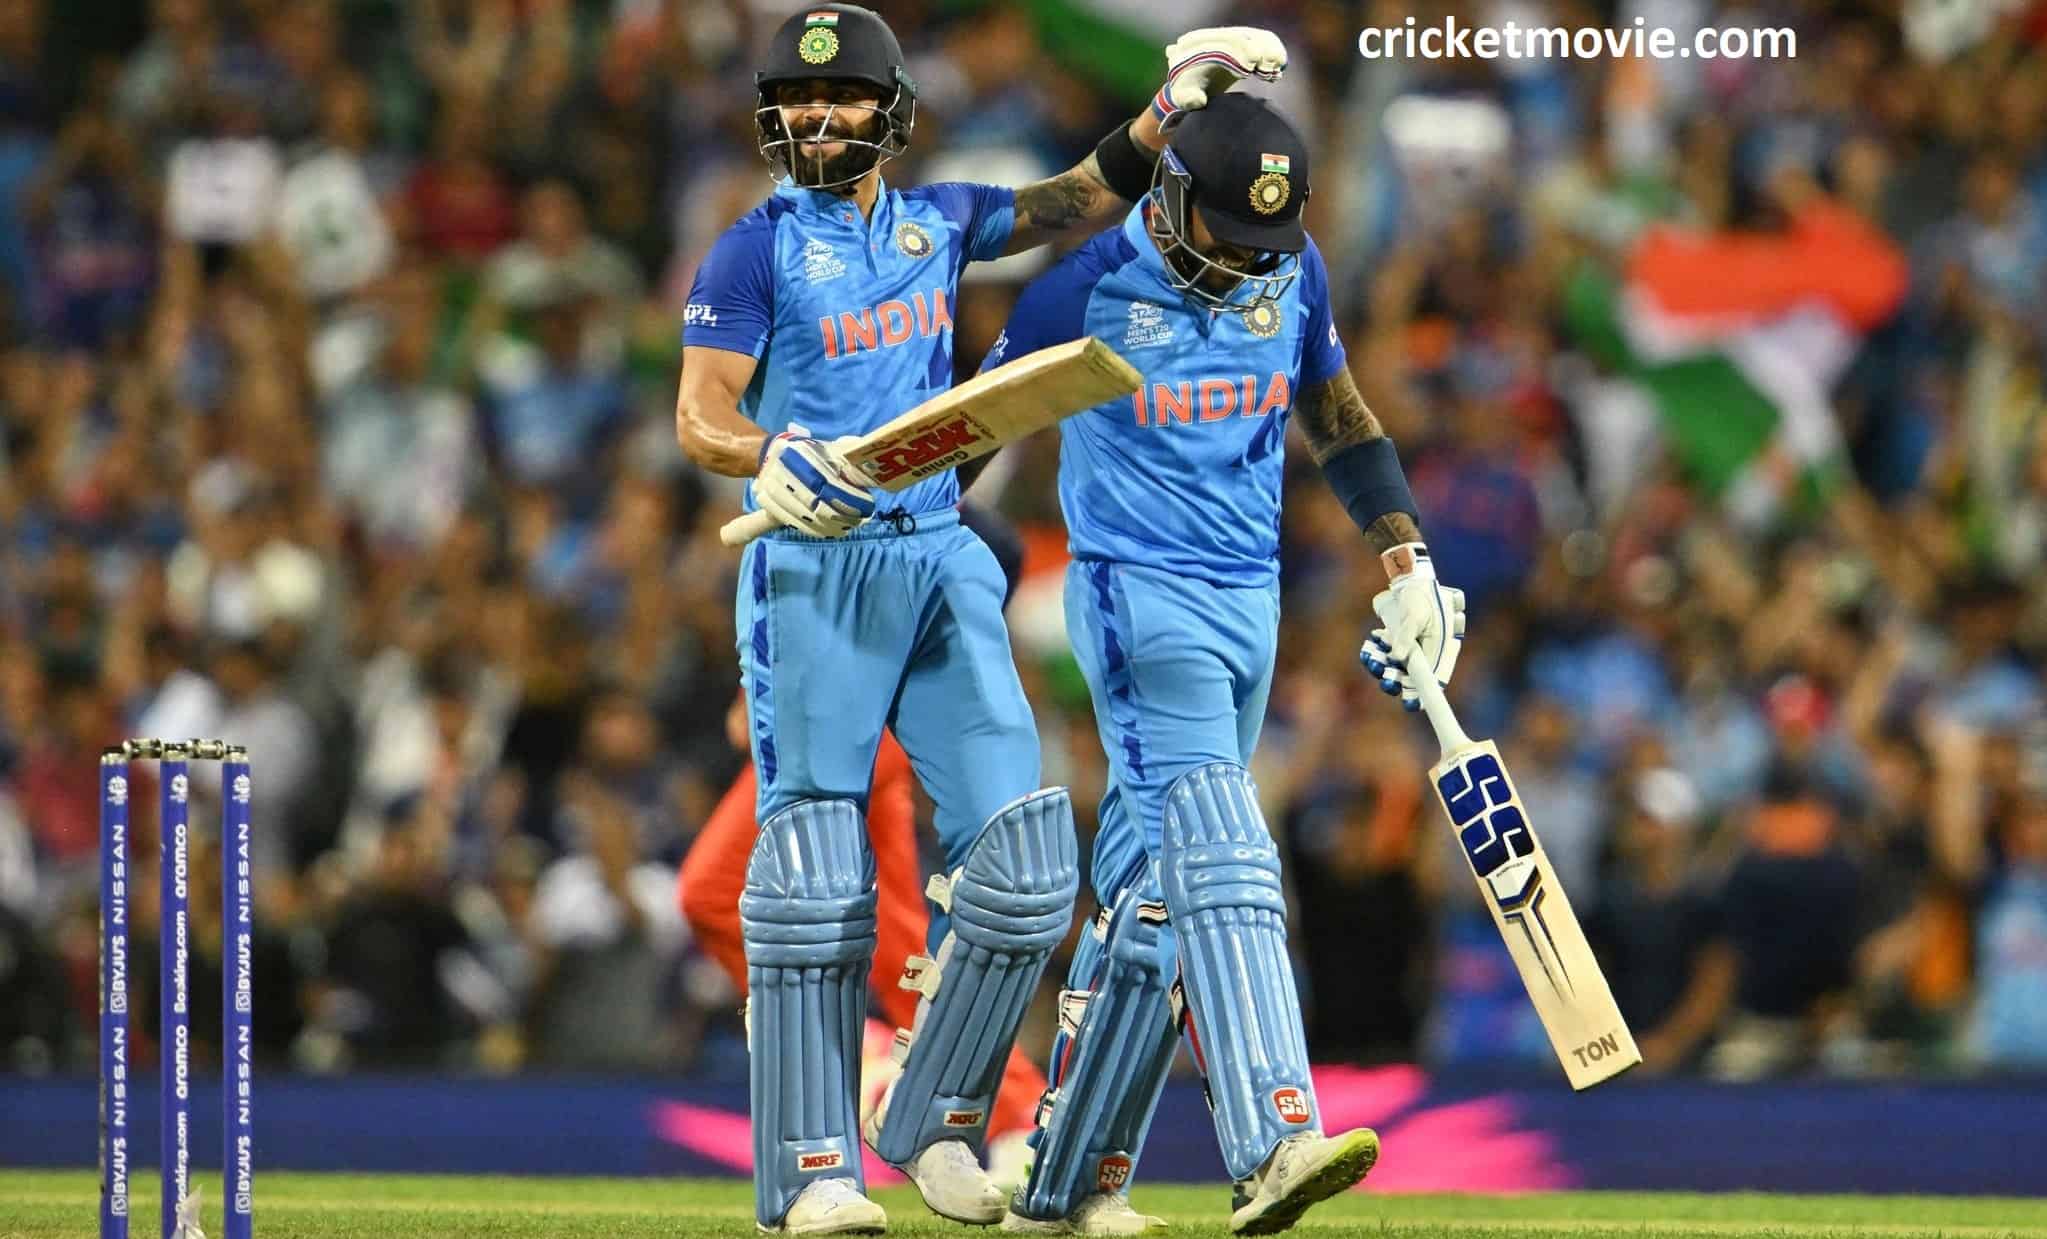 India beat Netherlands by 56 runs-cricketmovie.com